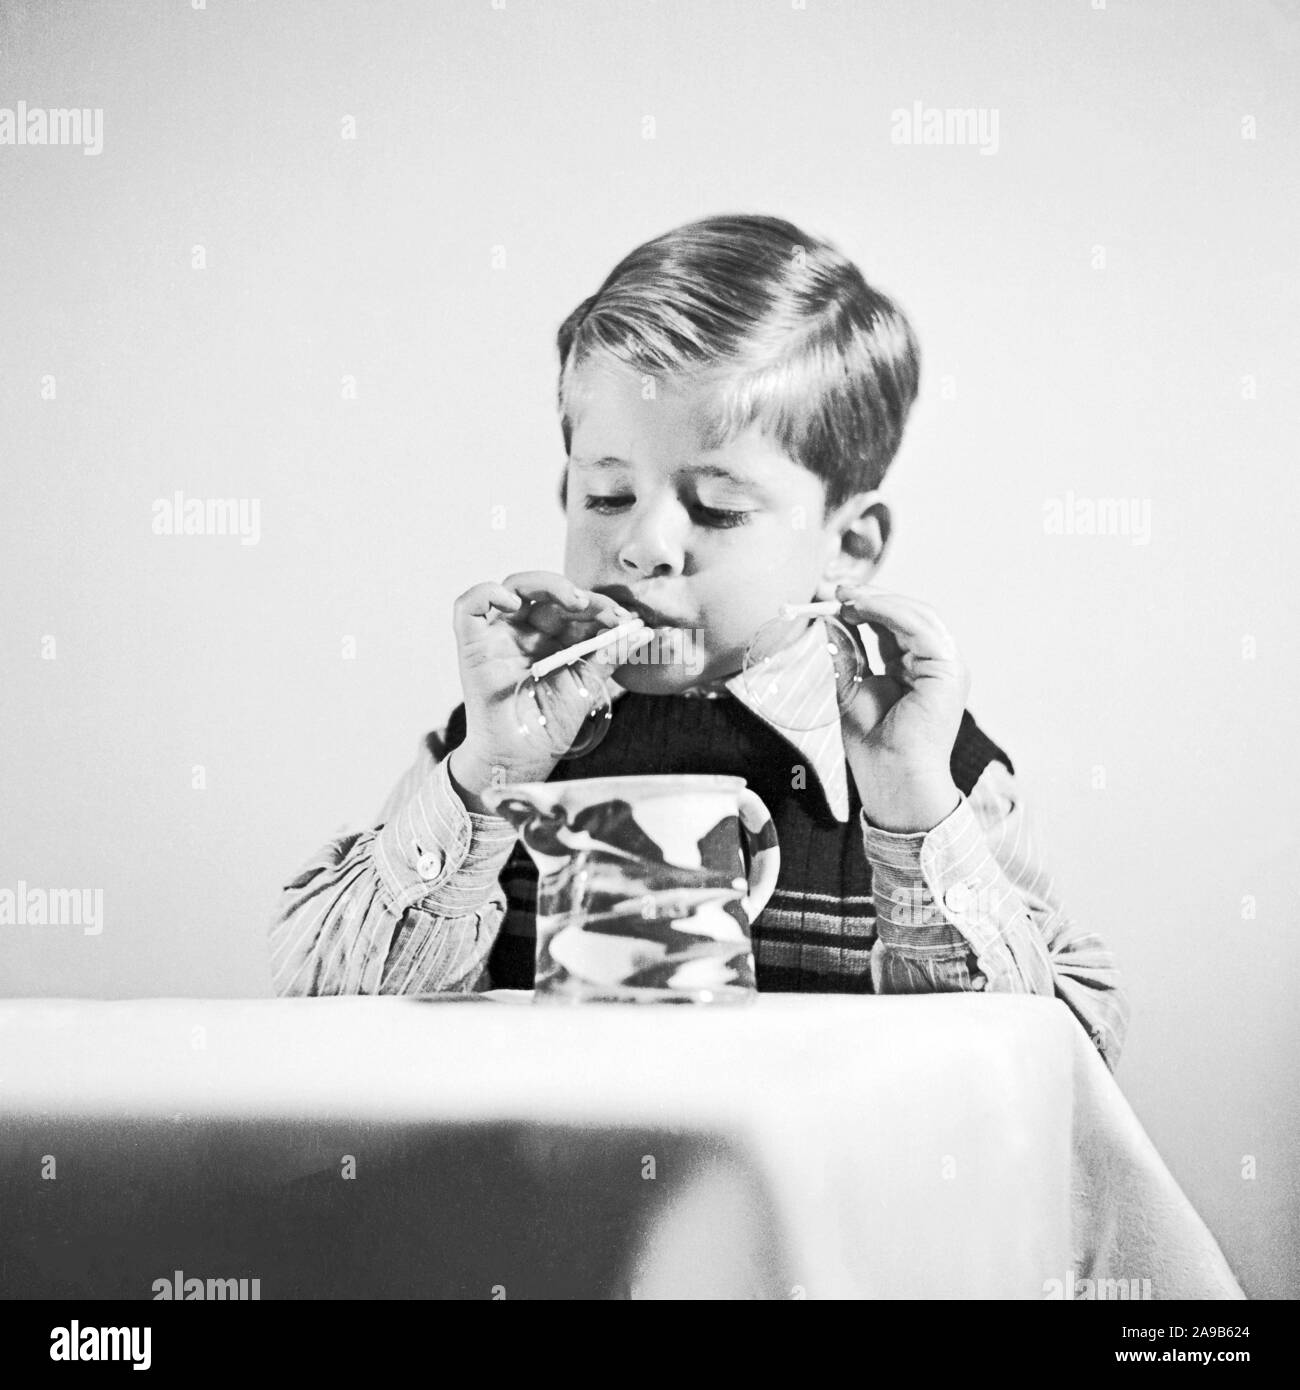 A little boy blowing bubbles, Germany 1951 Stock Photo